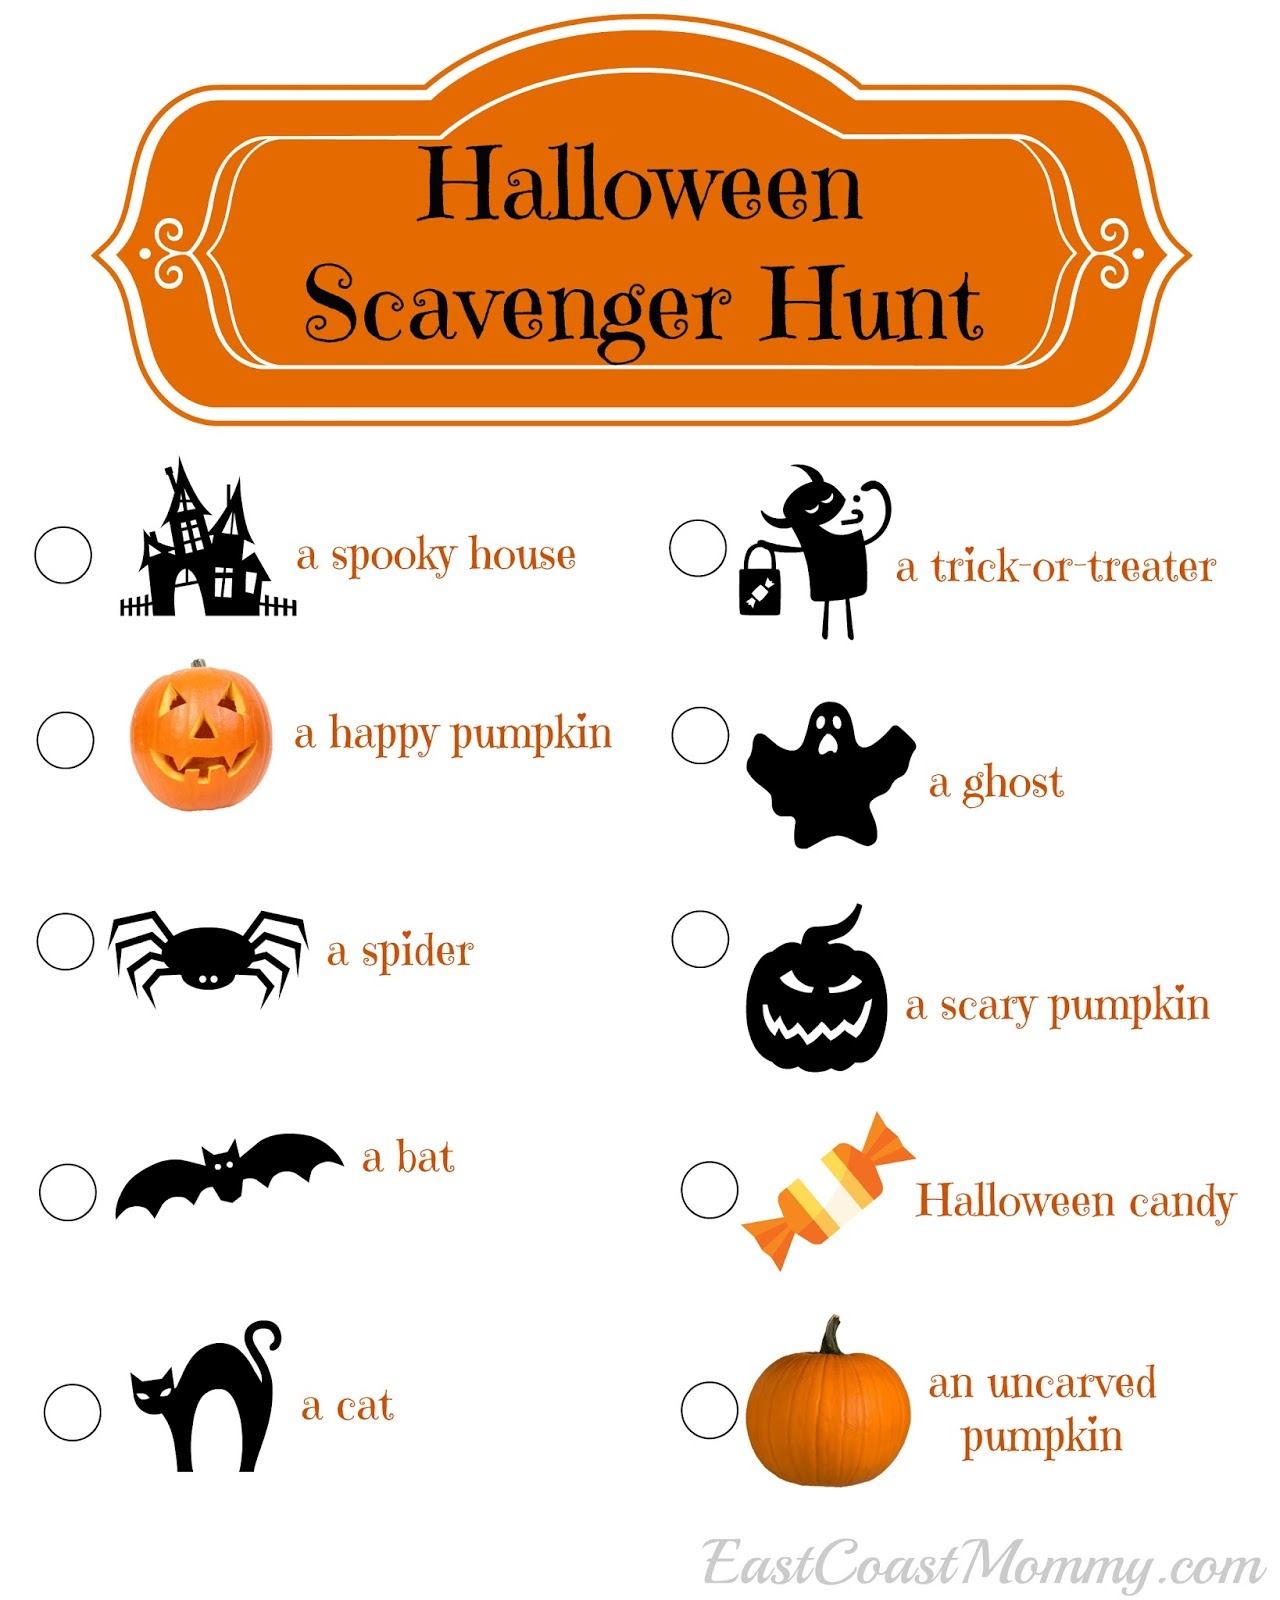 East Coast Mommy: Halloween Scavenger Hunt (With Free Printable) - Free Printable Halloween Scavenger Hunt